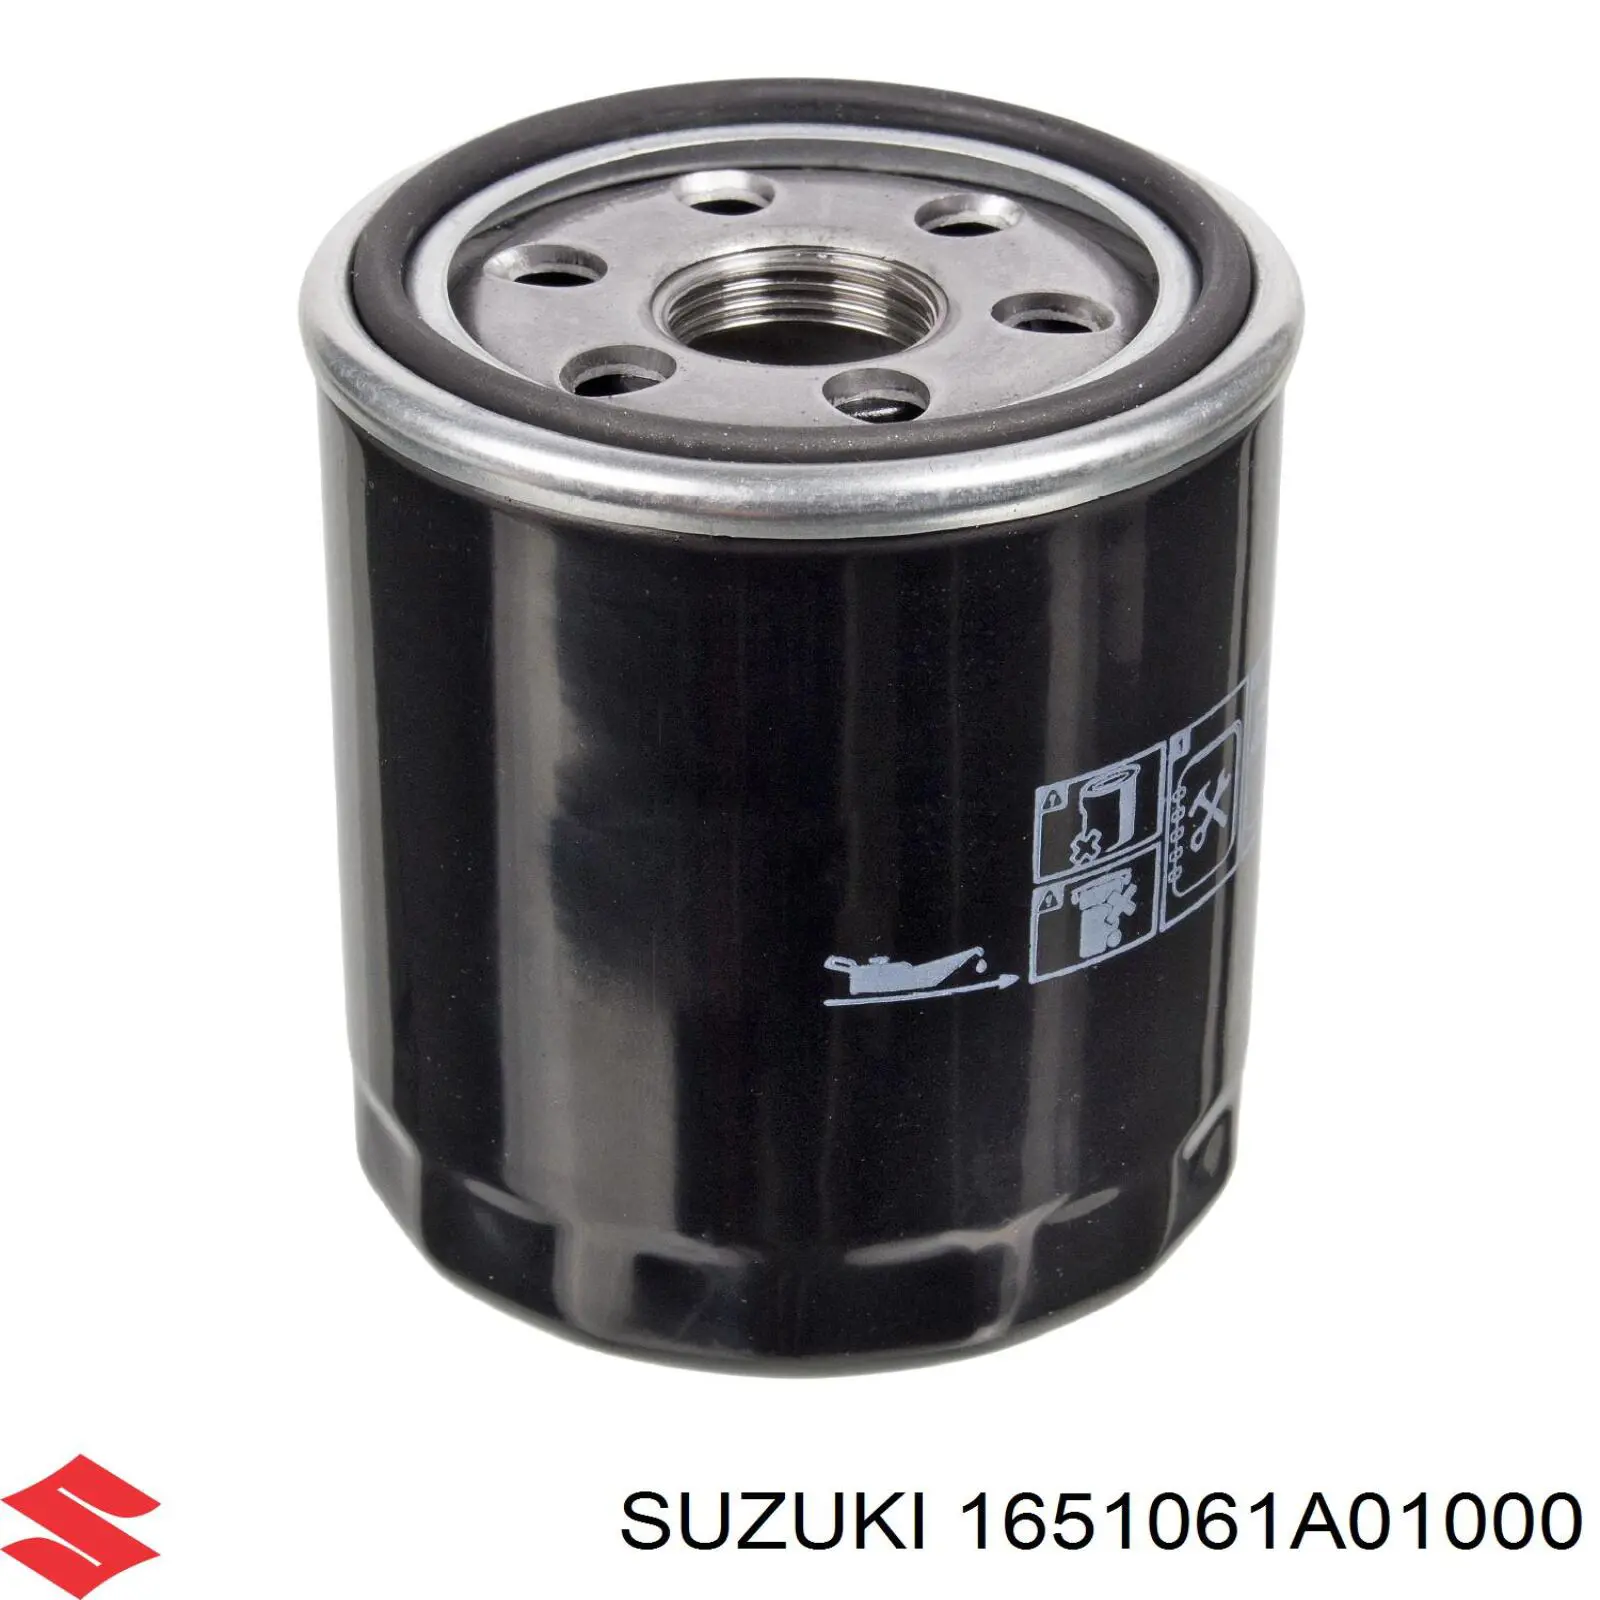 1651061A01000 Suzuki масляный фильтр